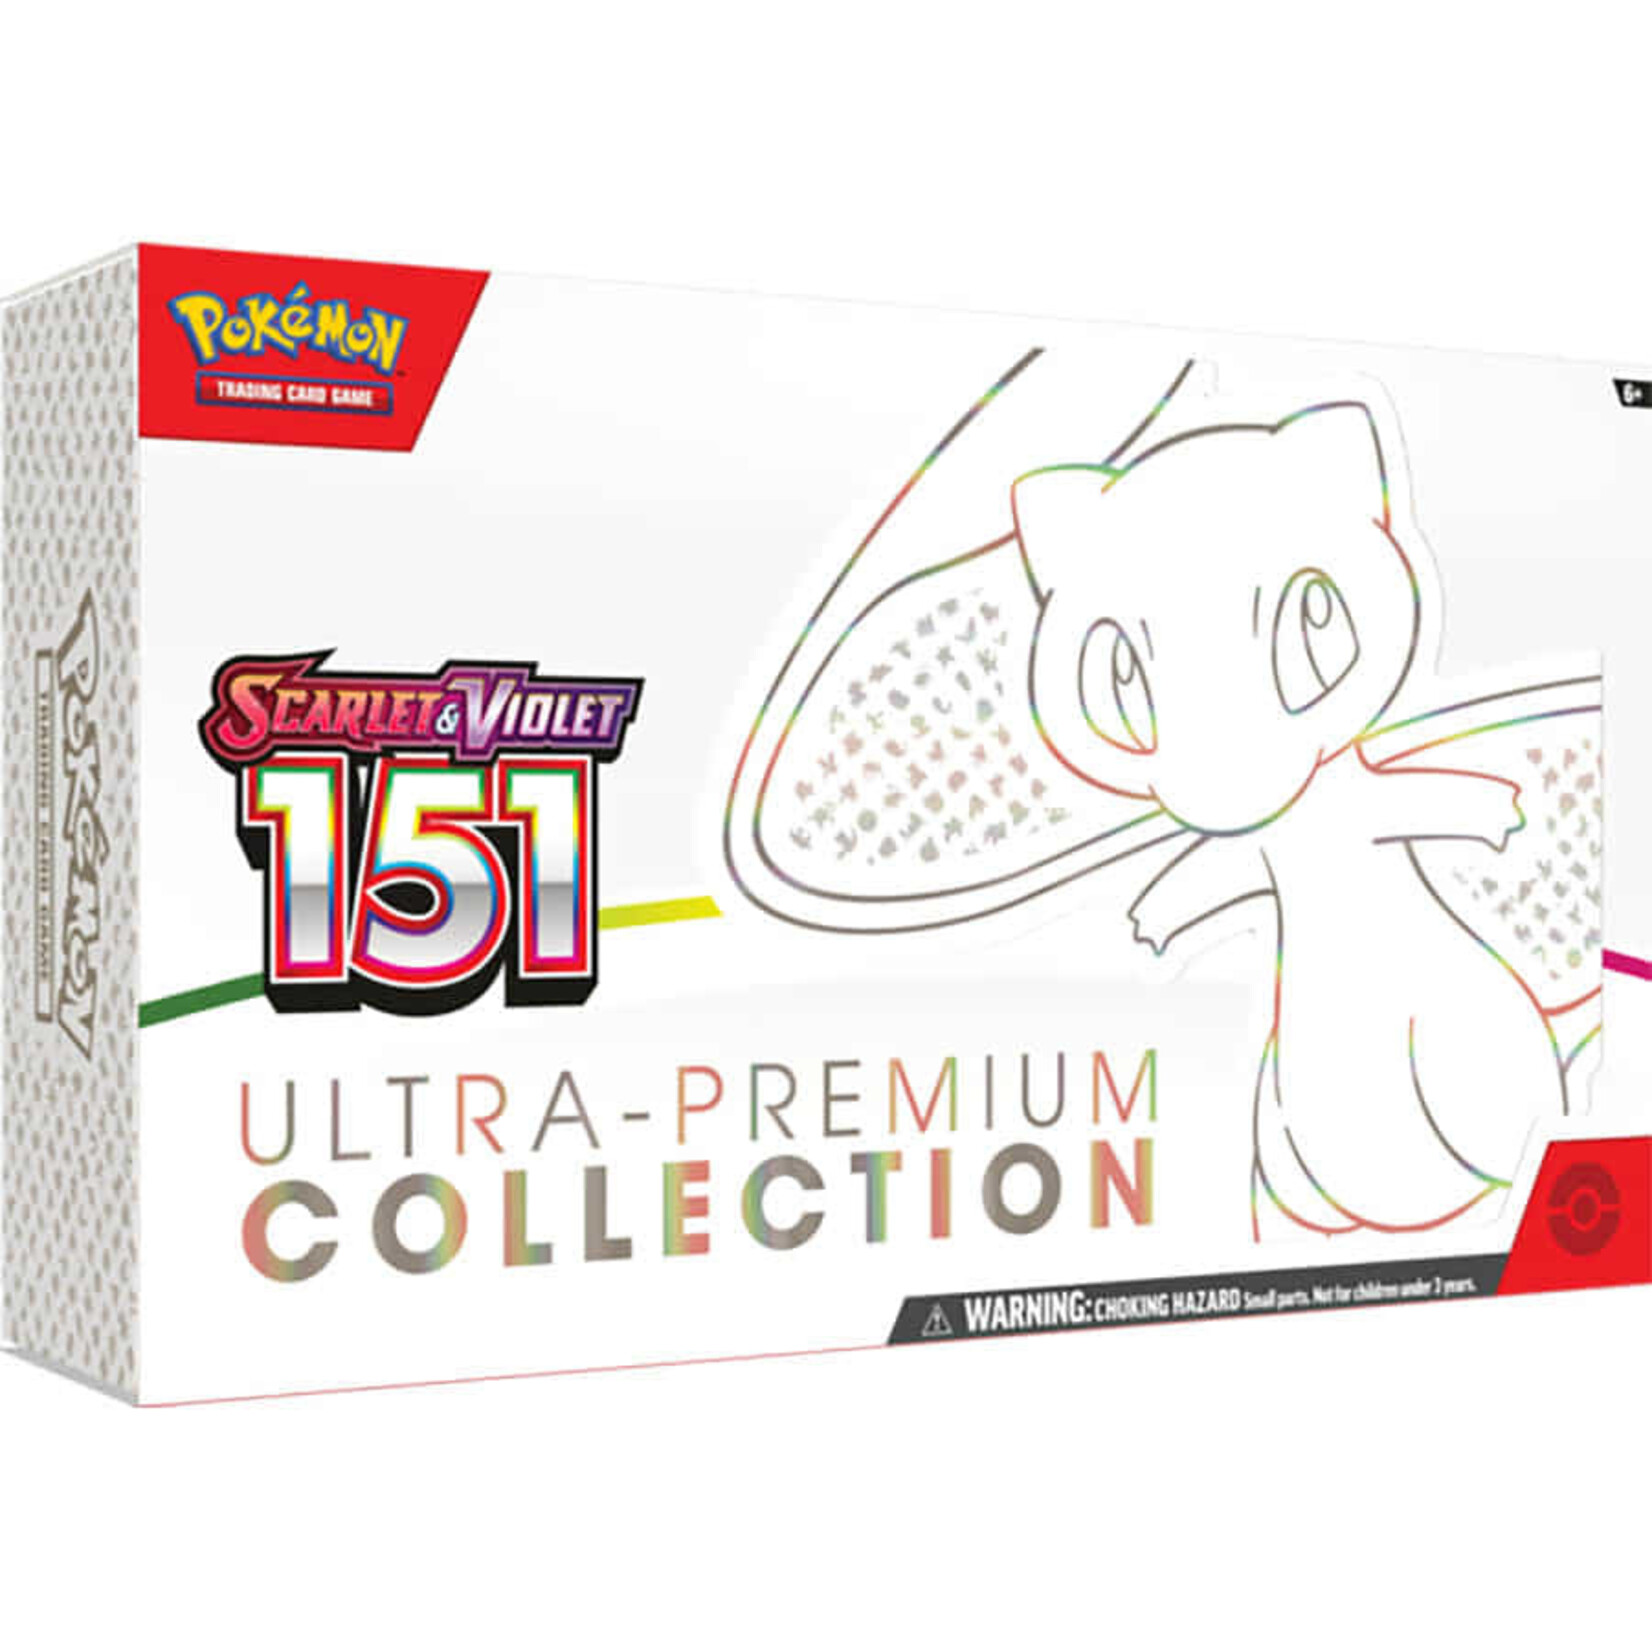 Pokemon PRE ORDER - POKEMON SCARLET AND VIOLET 151 ULTRA-PREMIUM COLLECTION